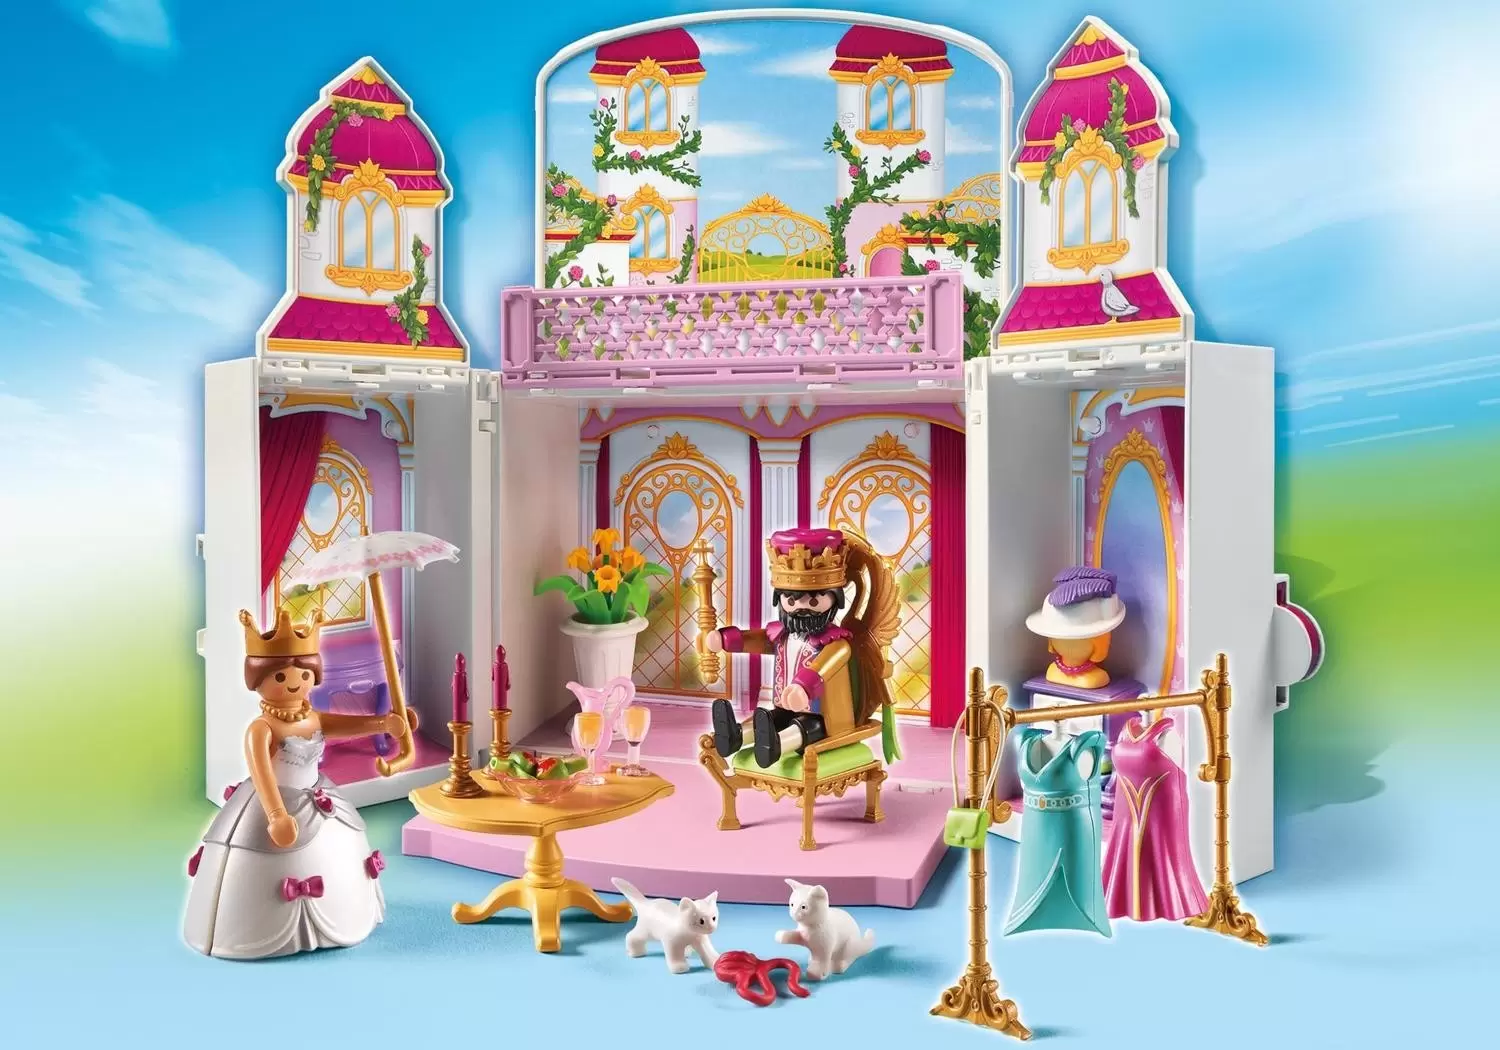 Playmobil Princess - My Secret Royal Palace Play Box